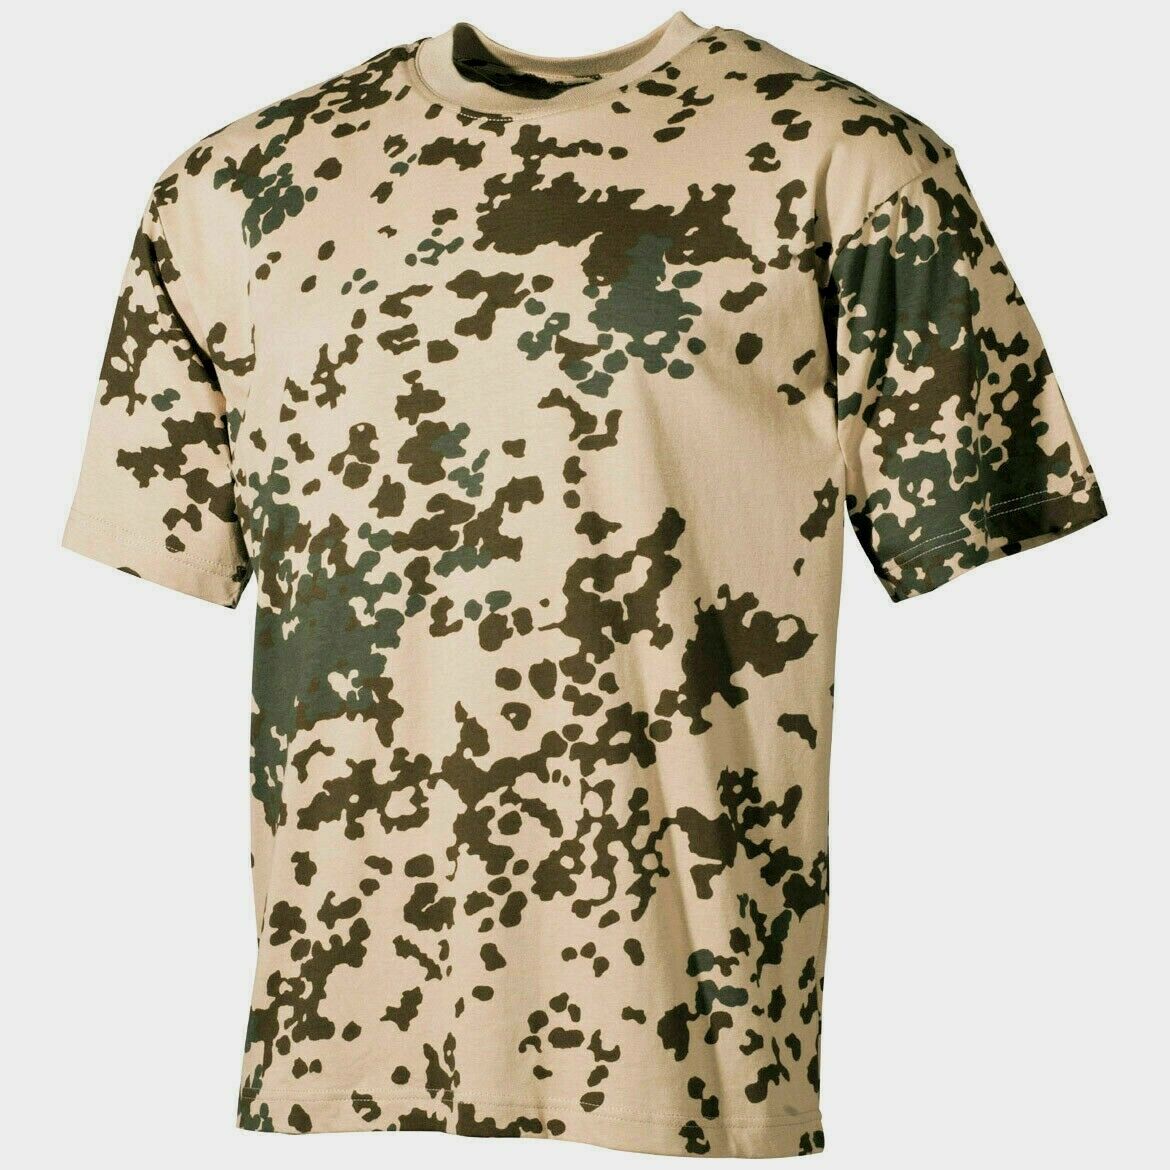 German Tropentarn Camouflage T-Shirt Camo Pattern Combat Army Tee 100% Cotton